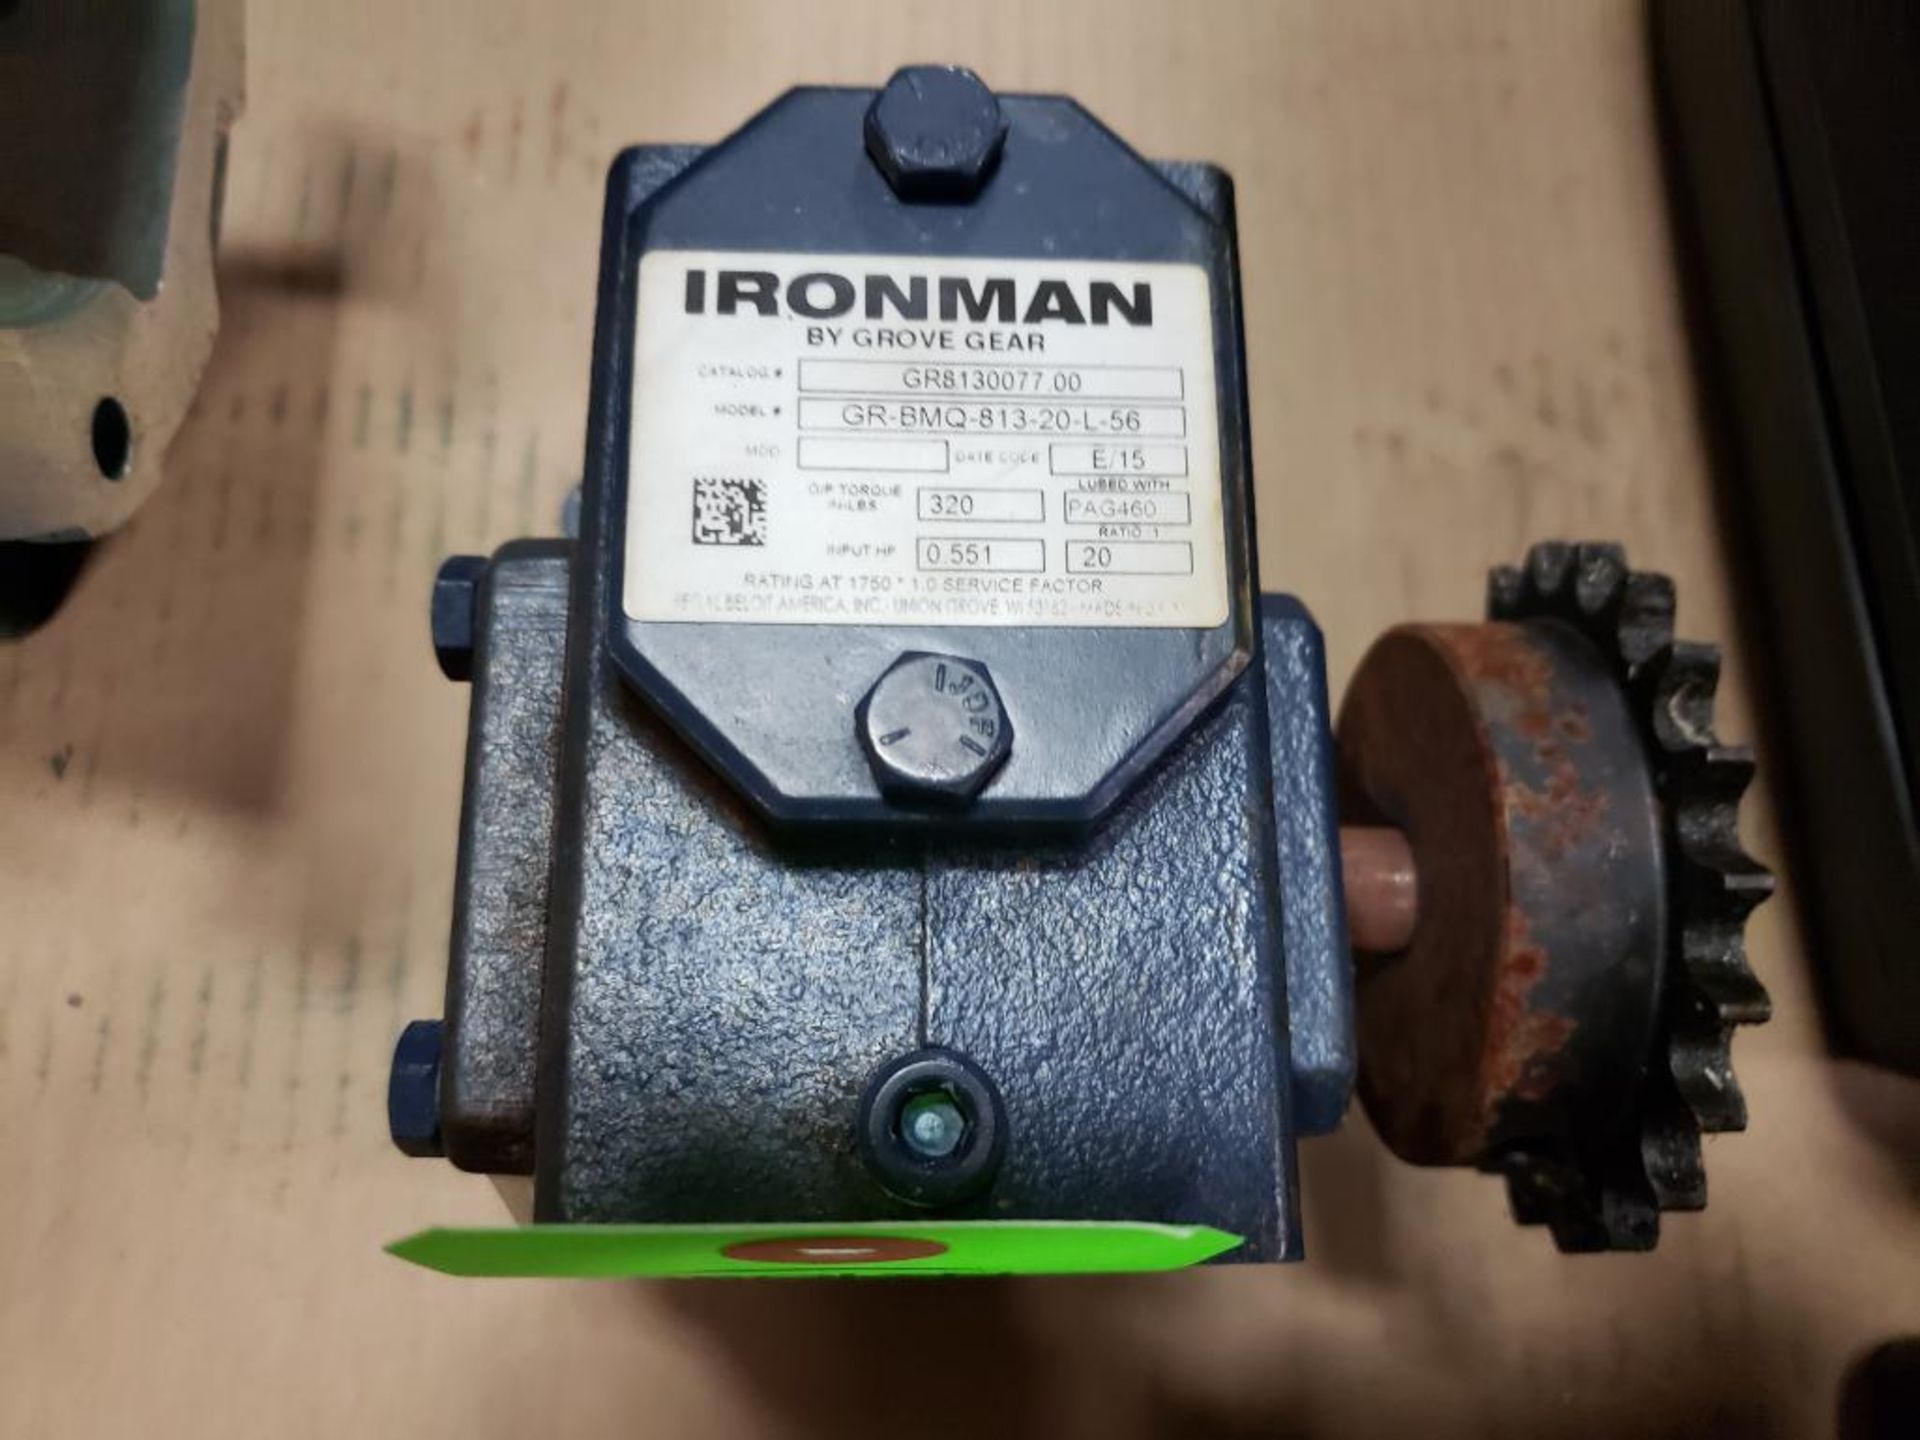 Grove Gear Ironman gearbox. GR8.130077.00. GR-BMQ-813-20-L-56 20:1 Ratio. - Image 2 of 4